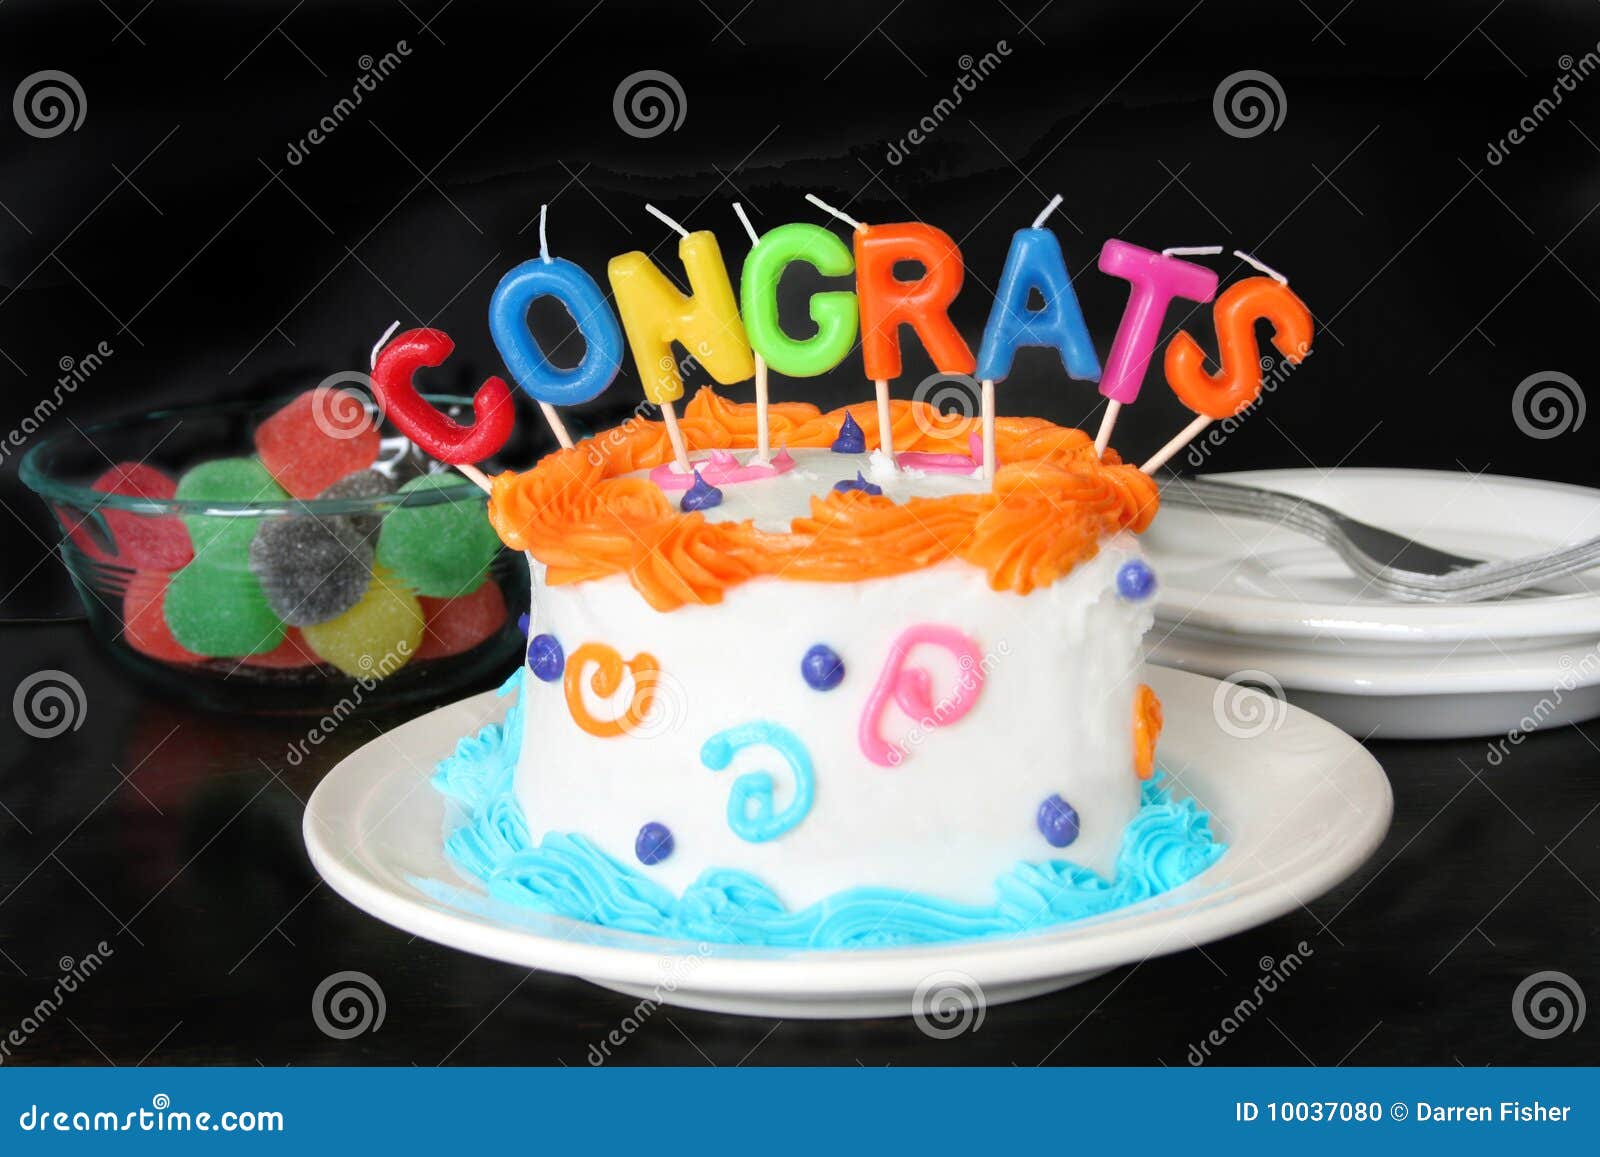 congratulation-cake-10037080.jpg